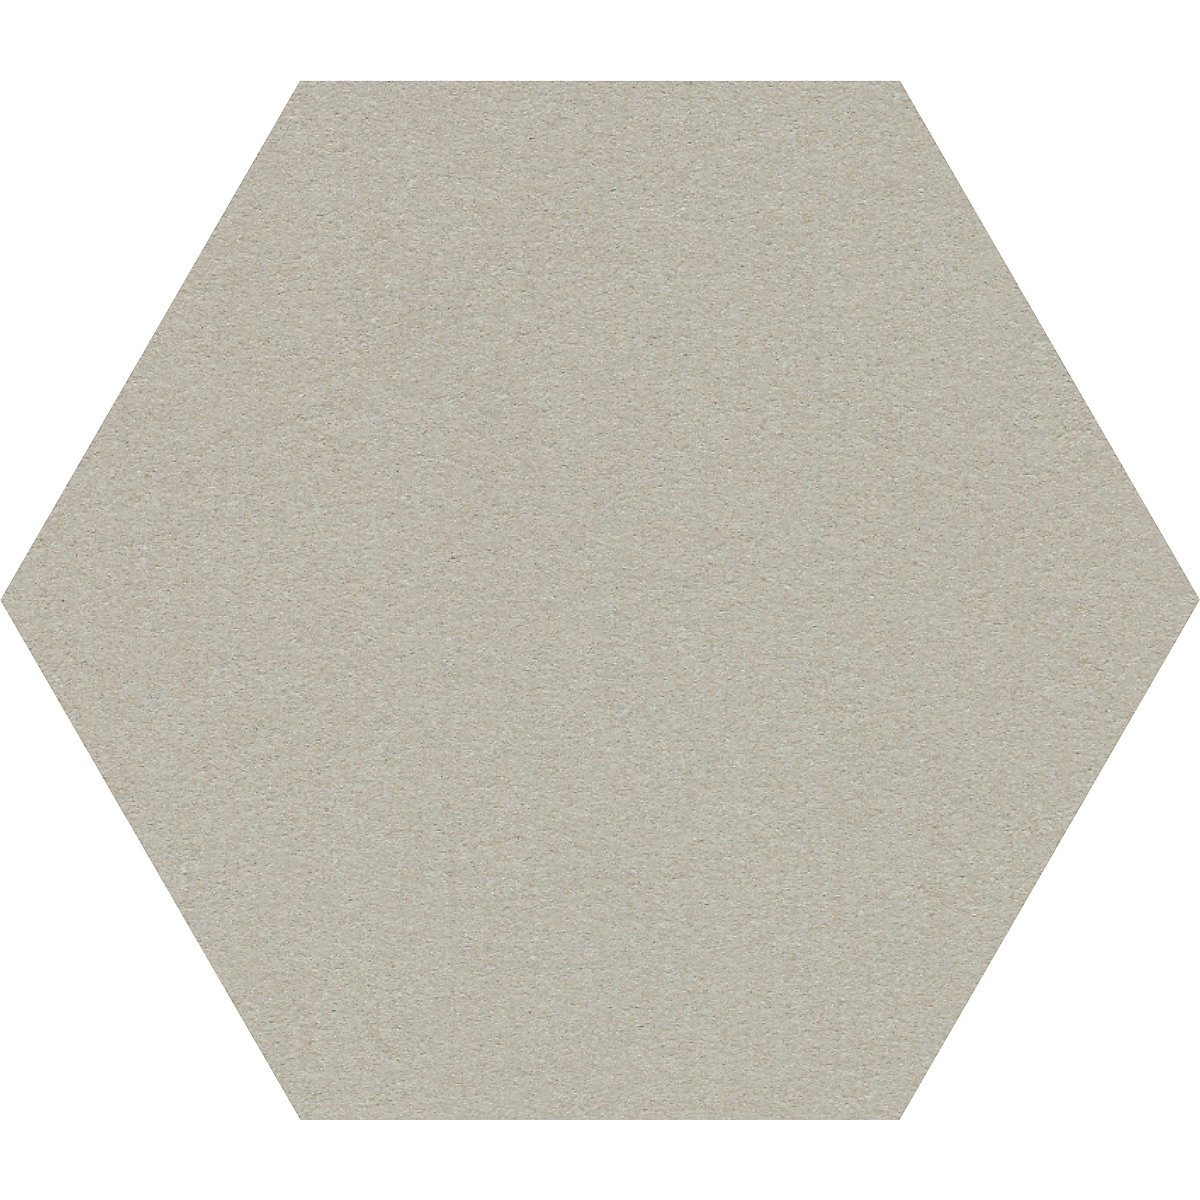 Hexagonal designer pin board – Chameleon, cork, WxH 600 x 600 mm, light grey-26